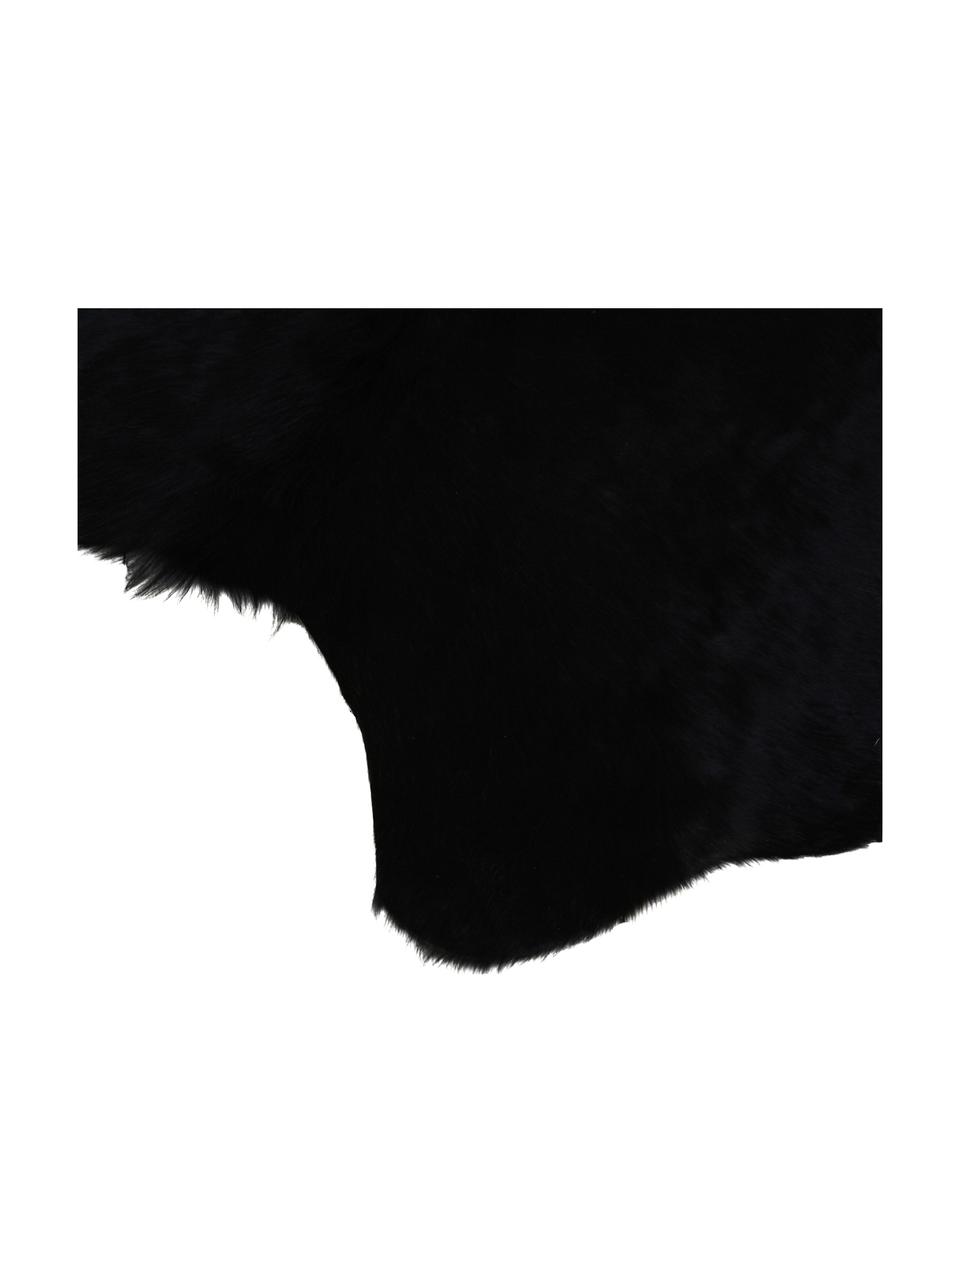 Dywan ze skóry bydlęcej Lana, Skóra bydlęca, Czarny, S 180 x D 200 cm